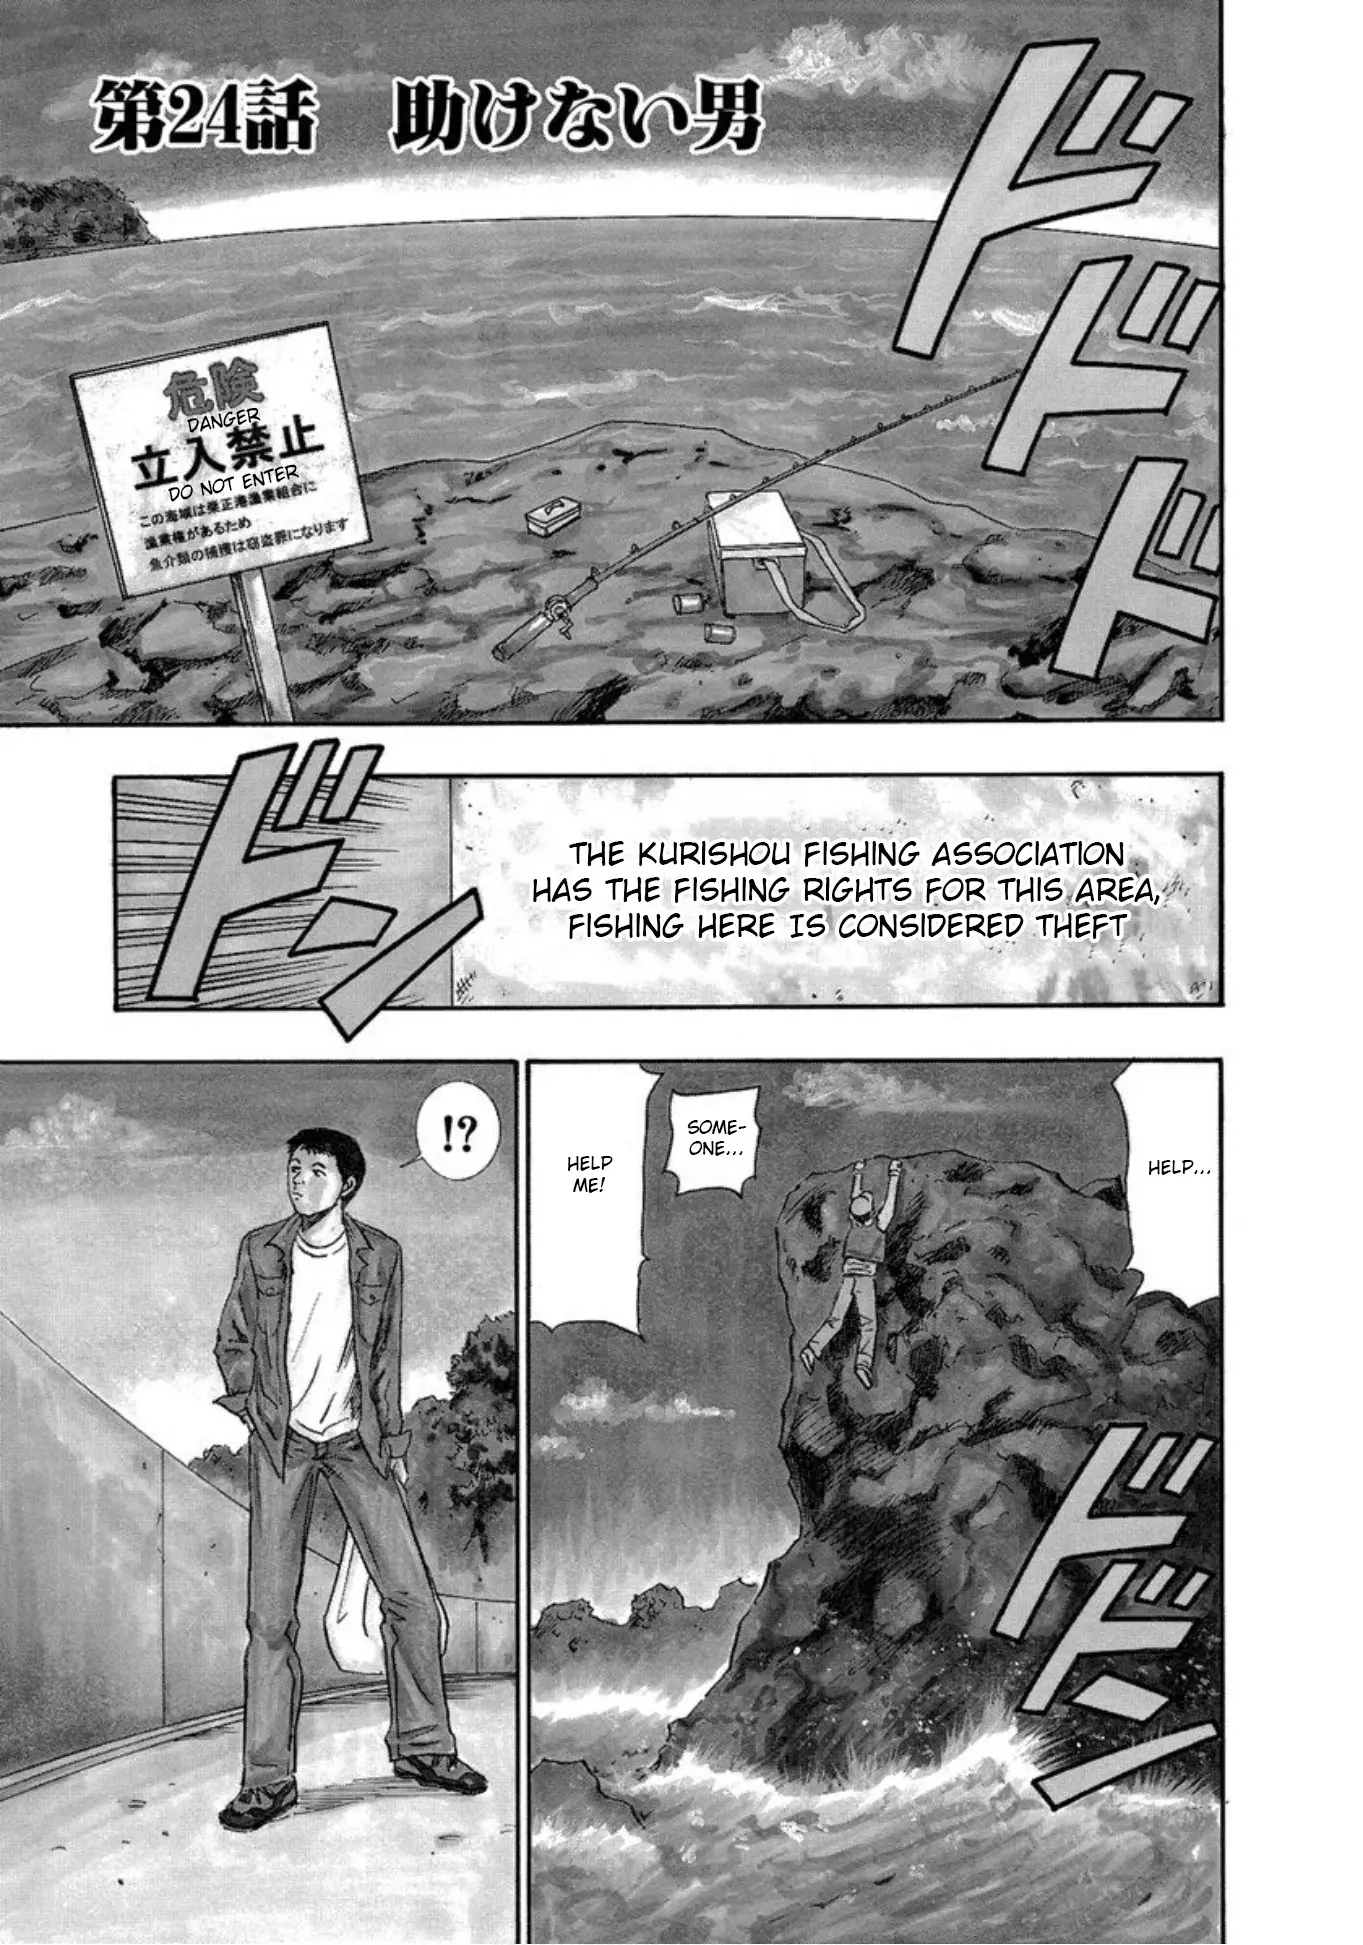 Uramiya Honpo - 24 page 1-54d9f524